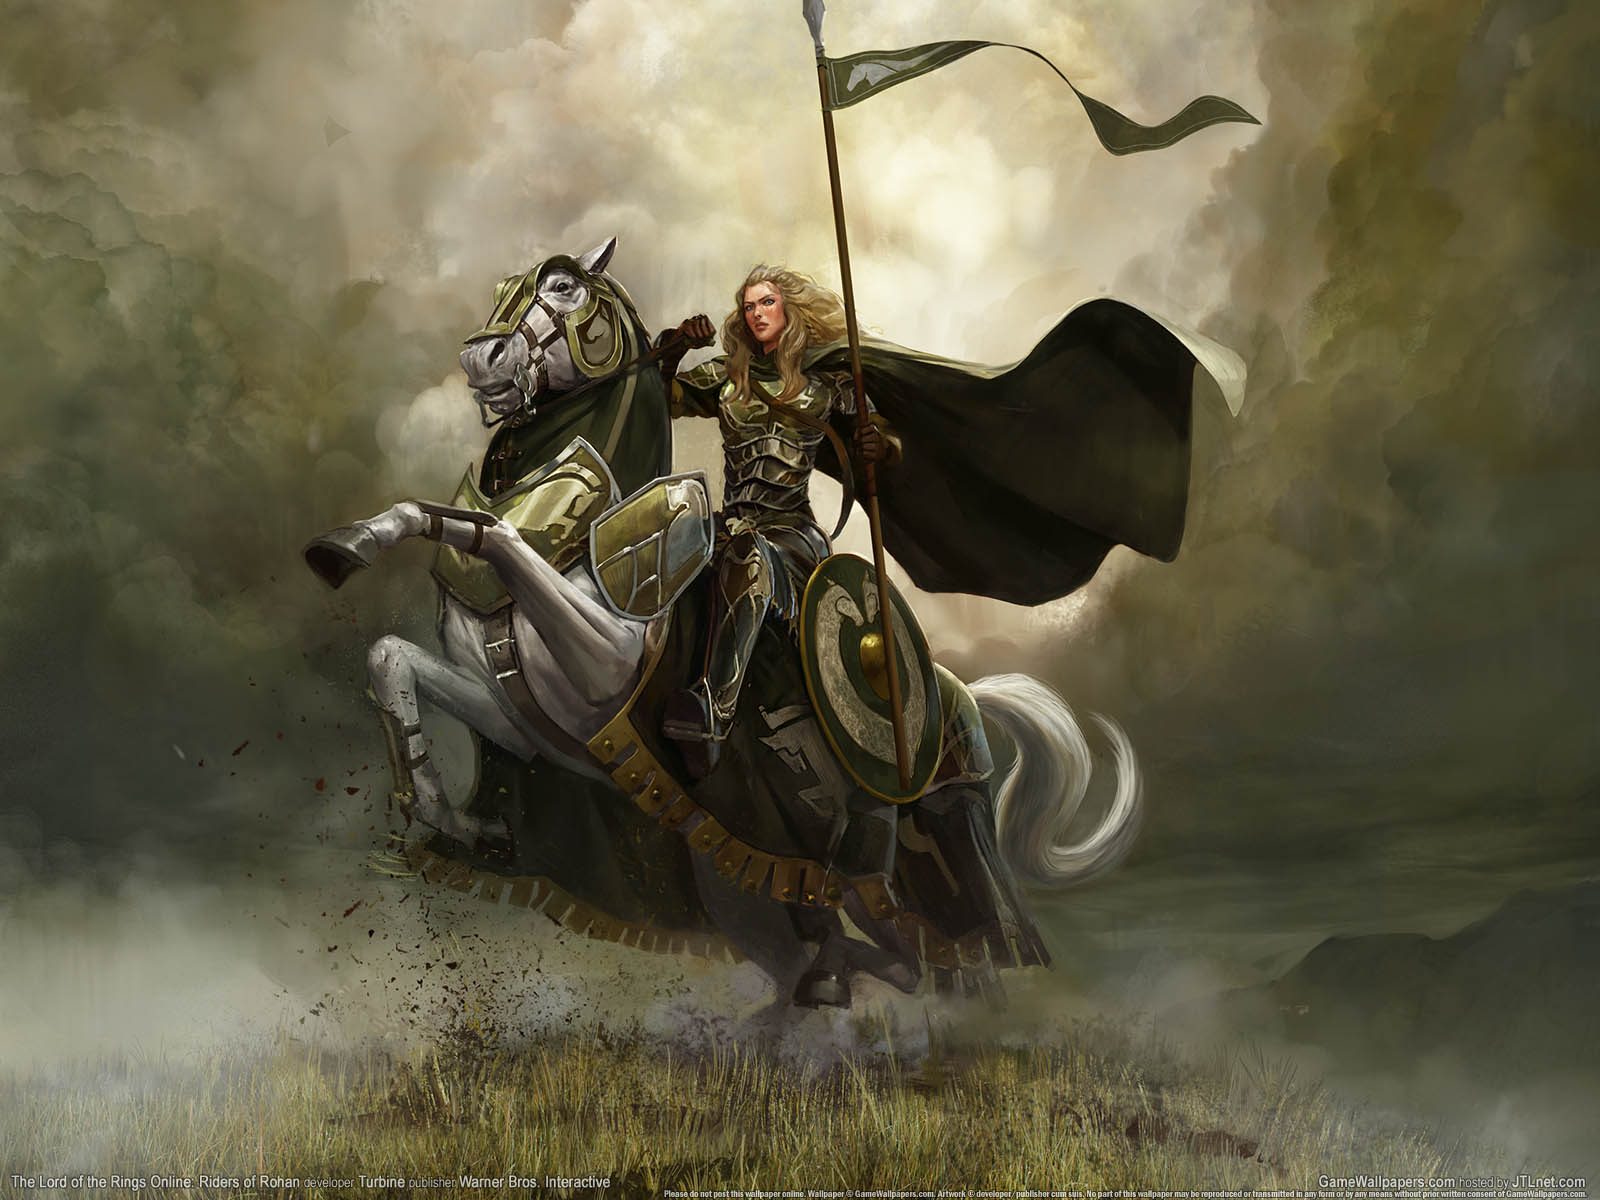 The Lord of the Rings Online%3A Riders of Rohan fondo de escritorio 02 1600x1200